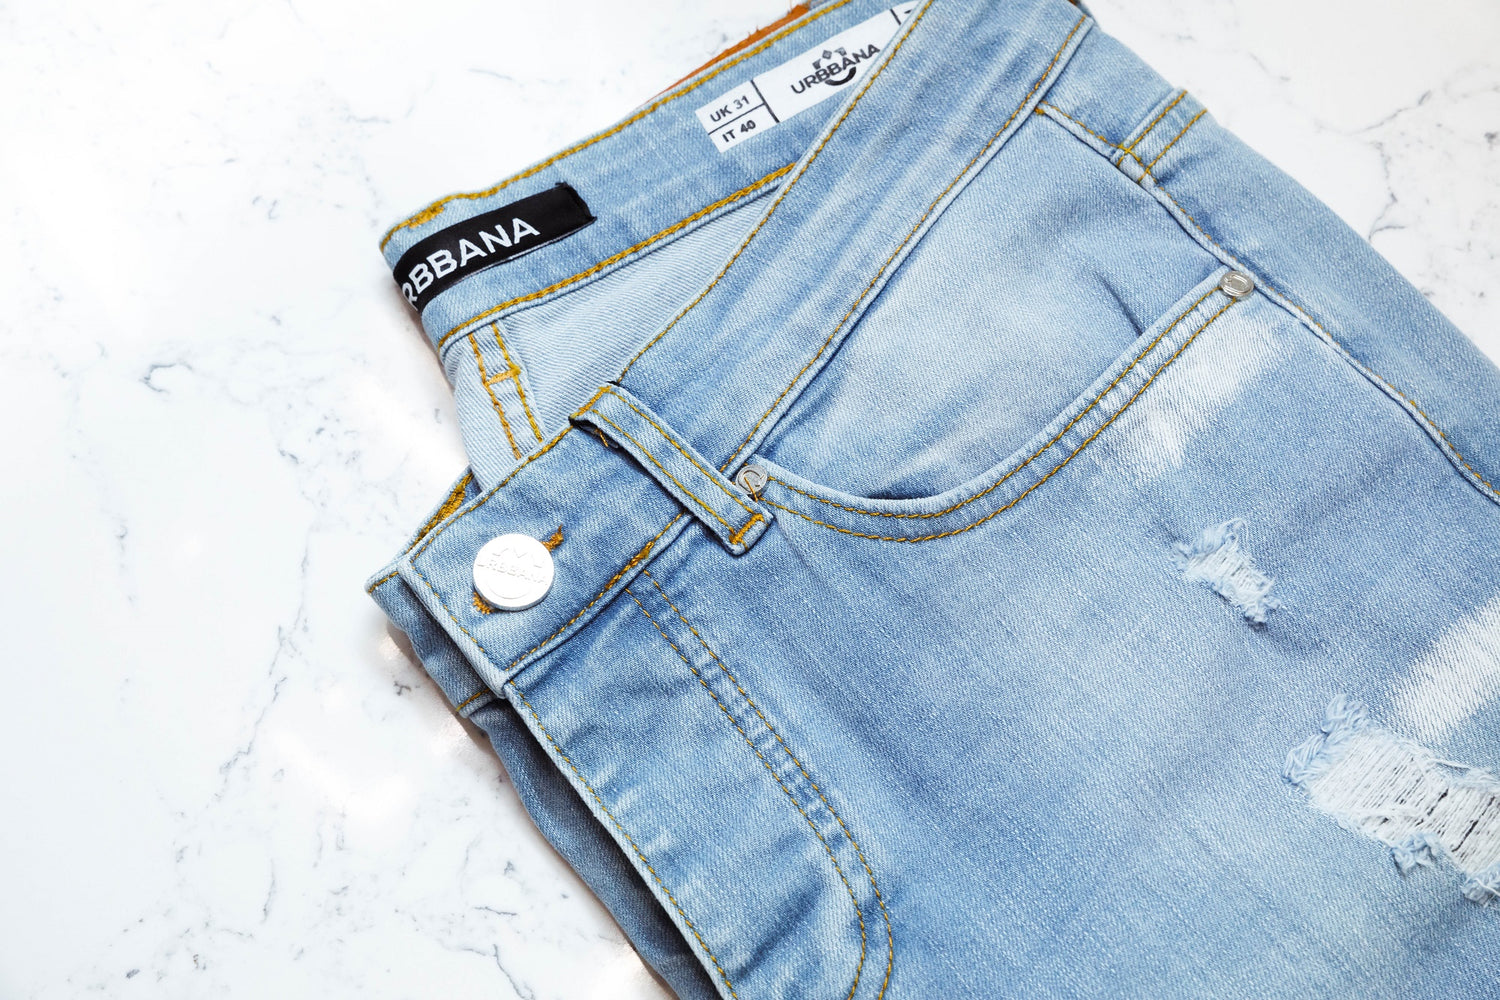 The Janzek Jeans - Jeans by Urbbana